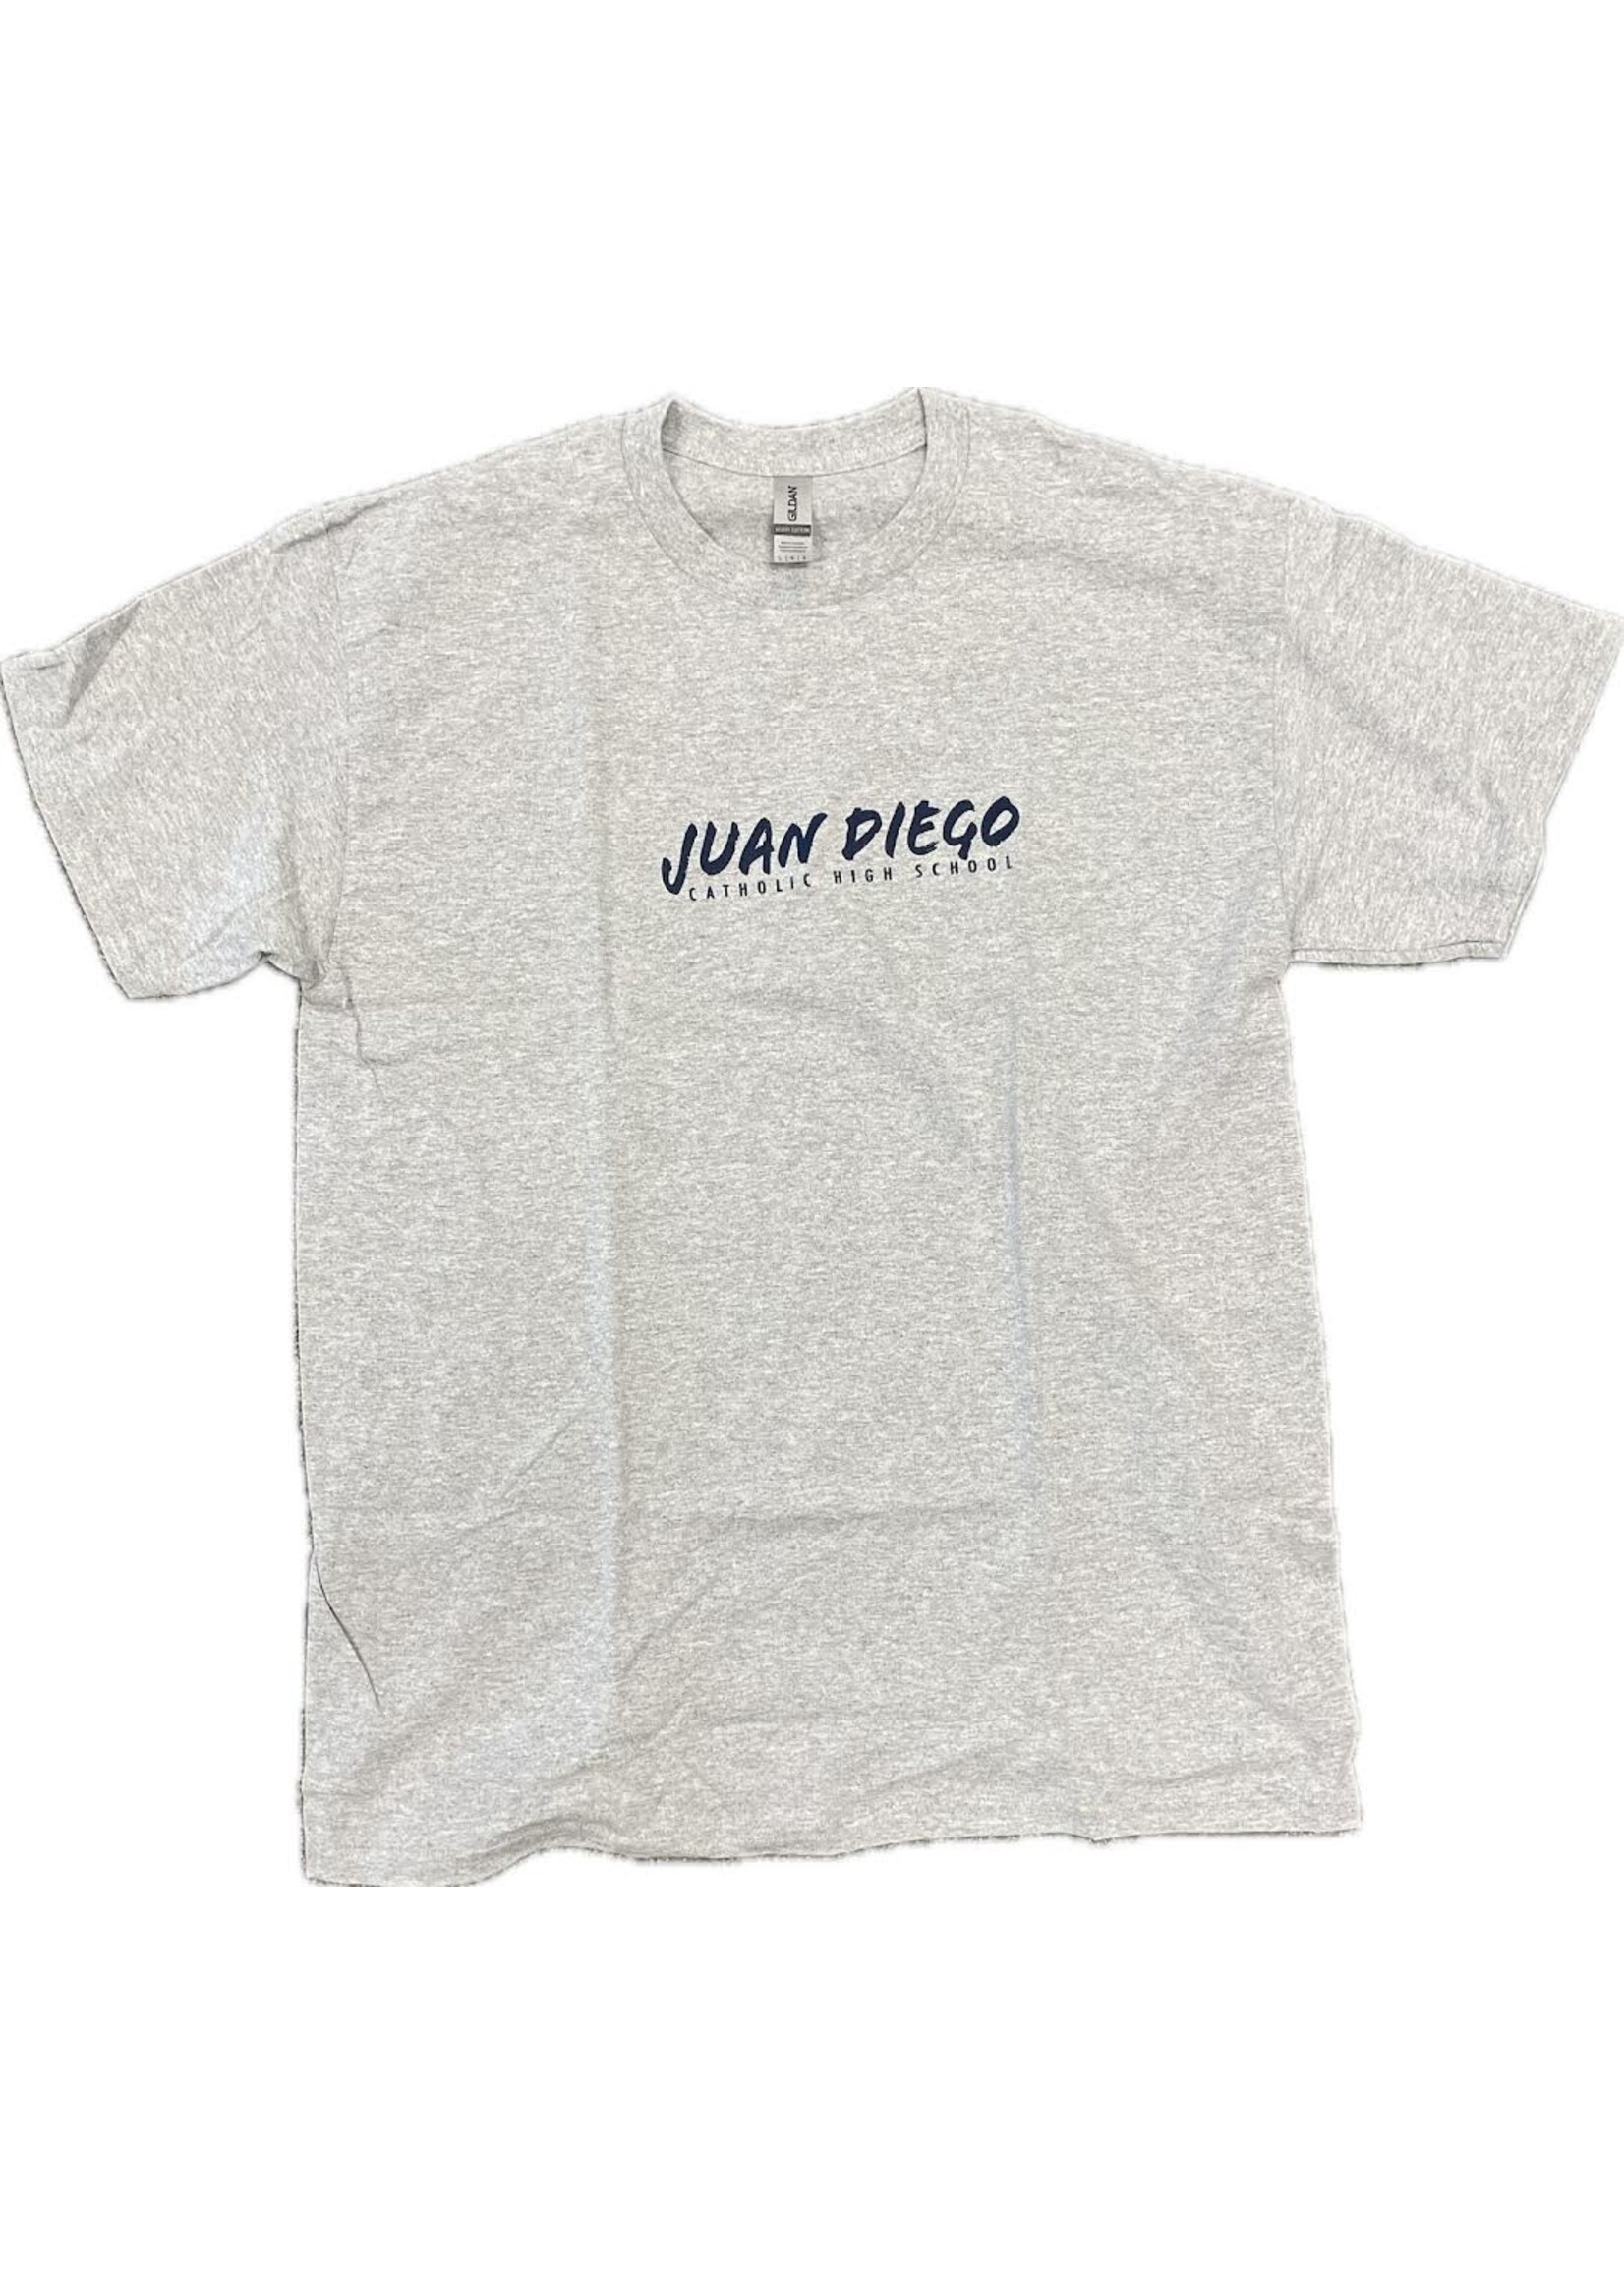 NON-UNIFORM Juan Diego Catholic School - Spirit Shirt, Unisex